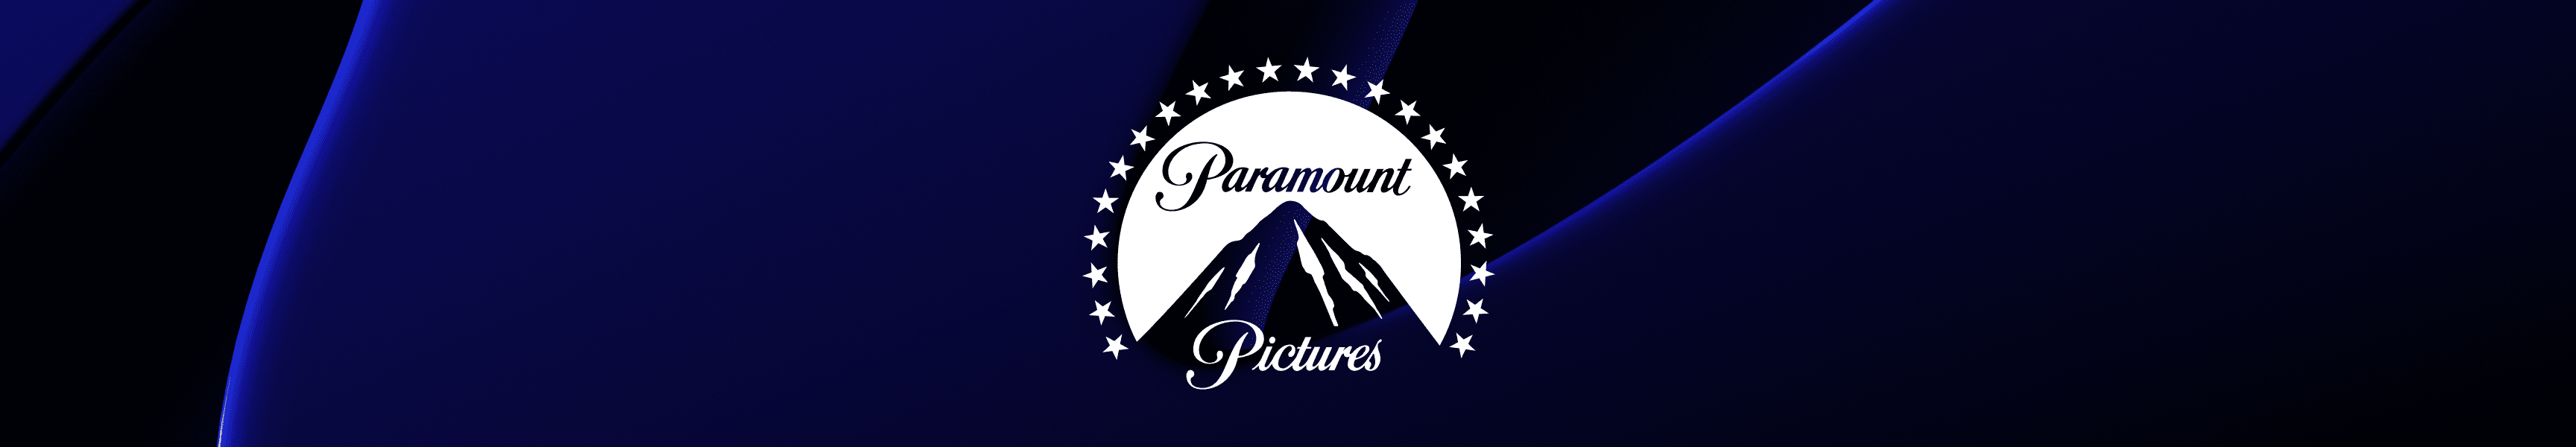 Paramount Pictures Sous-verres